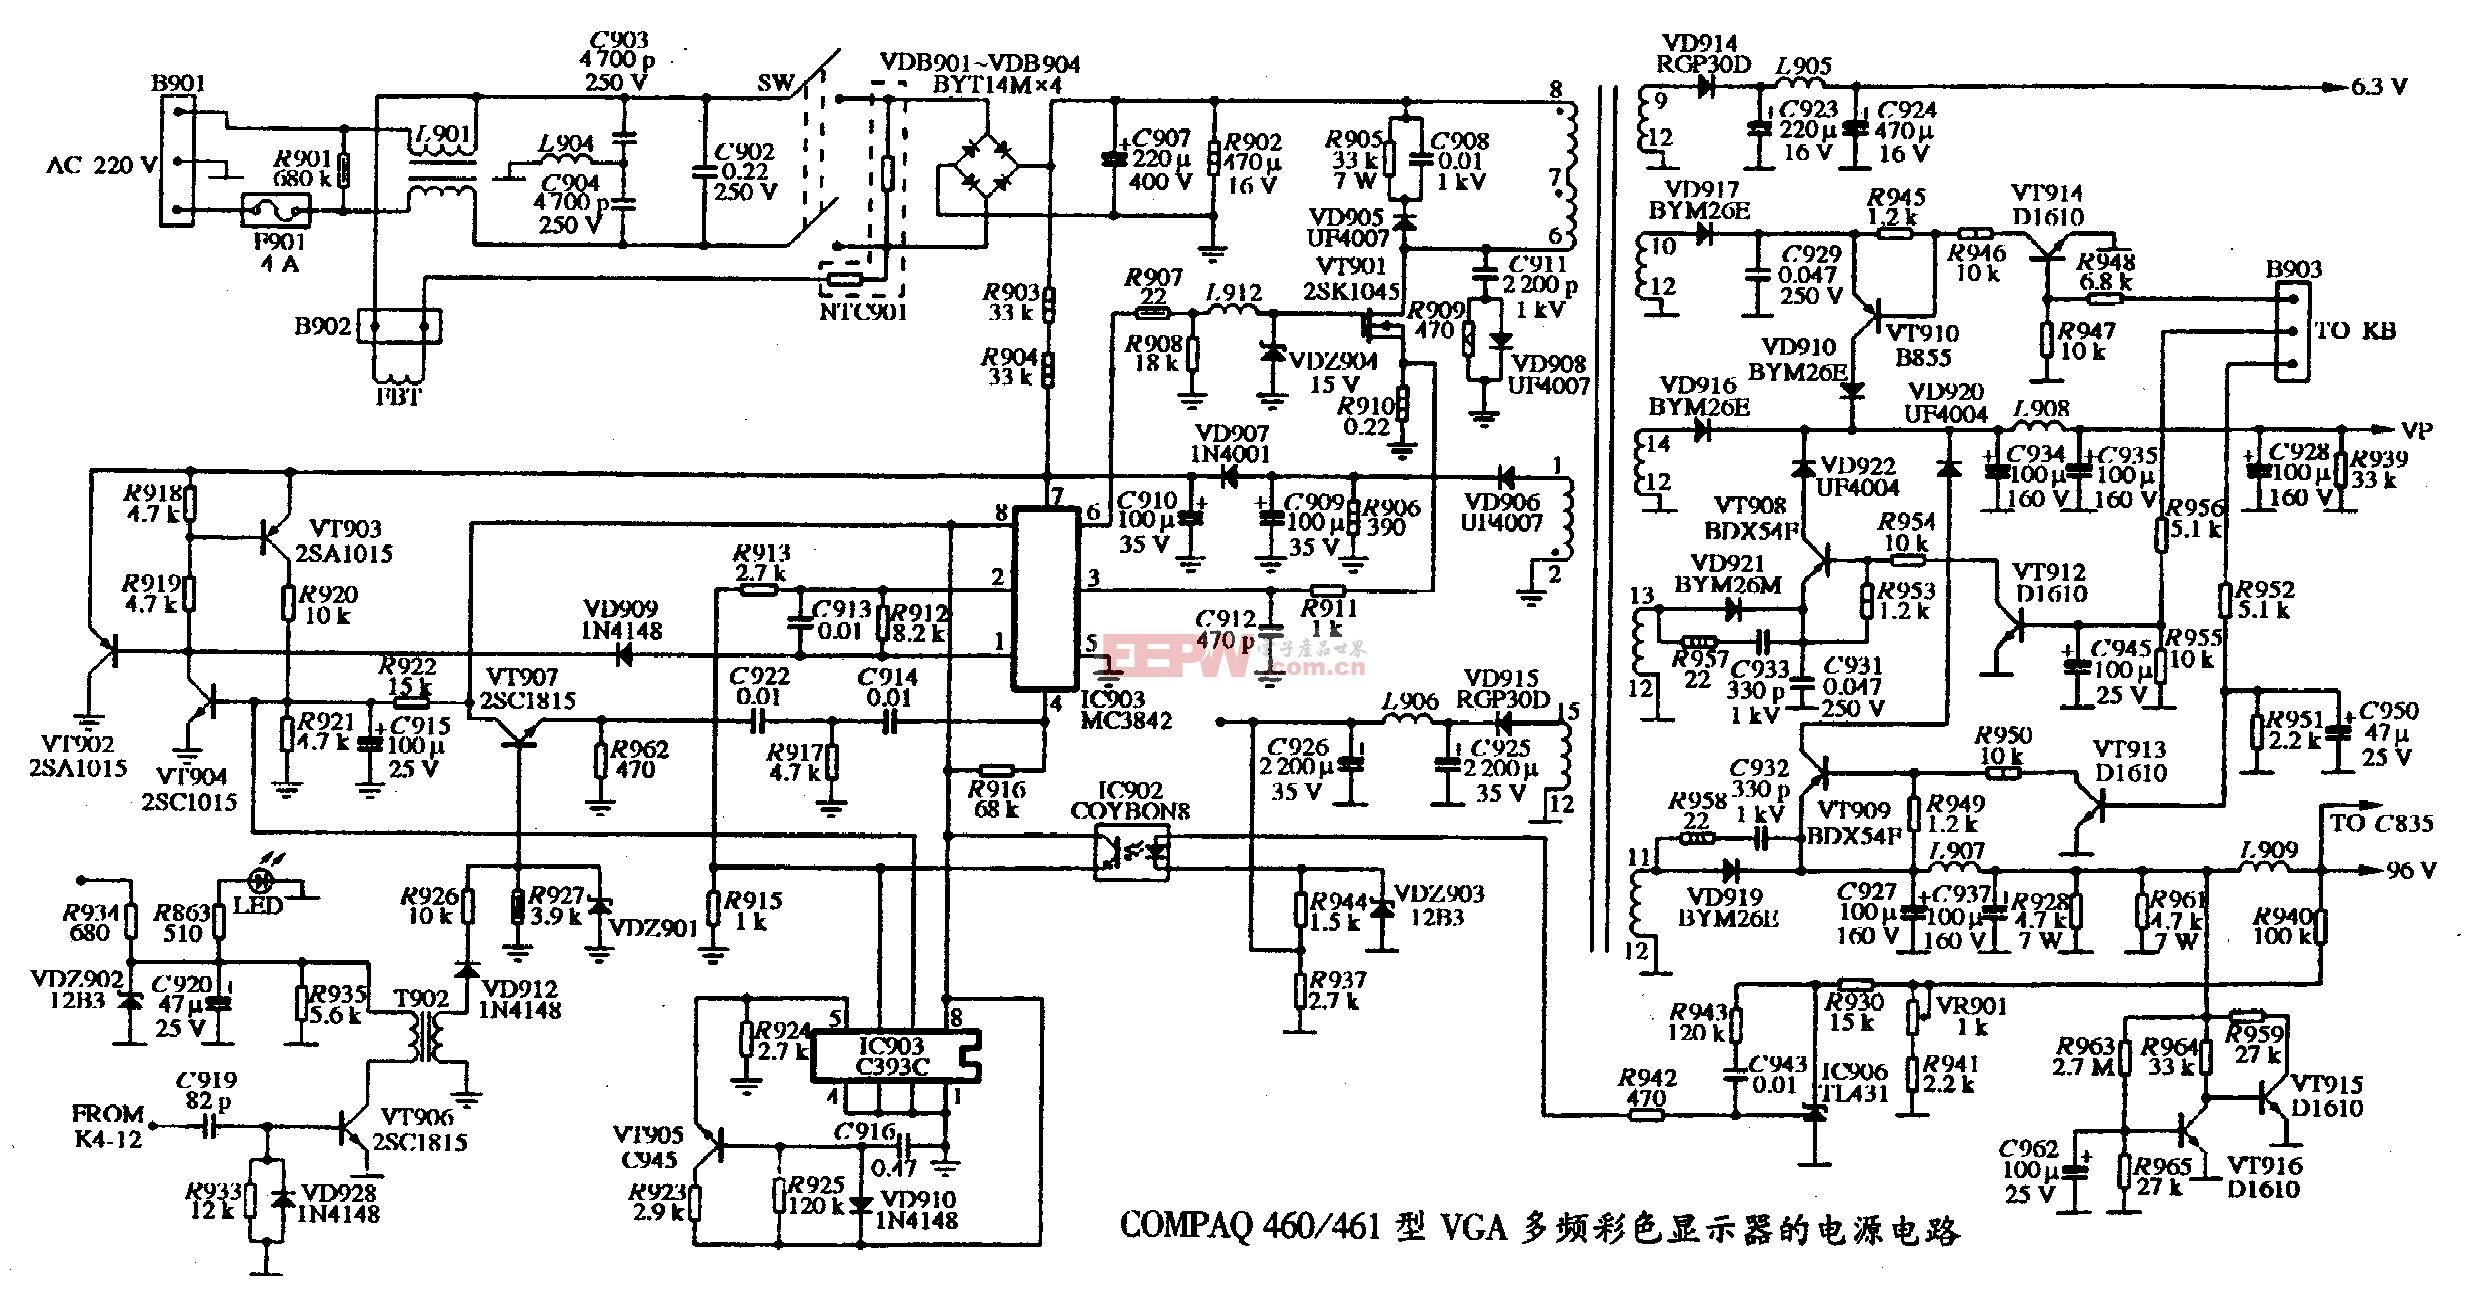  COMPAQ 460/461型VGA多频彩色显示器的电源电路图.gif